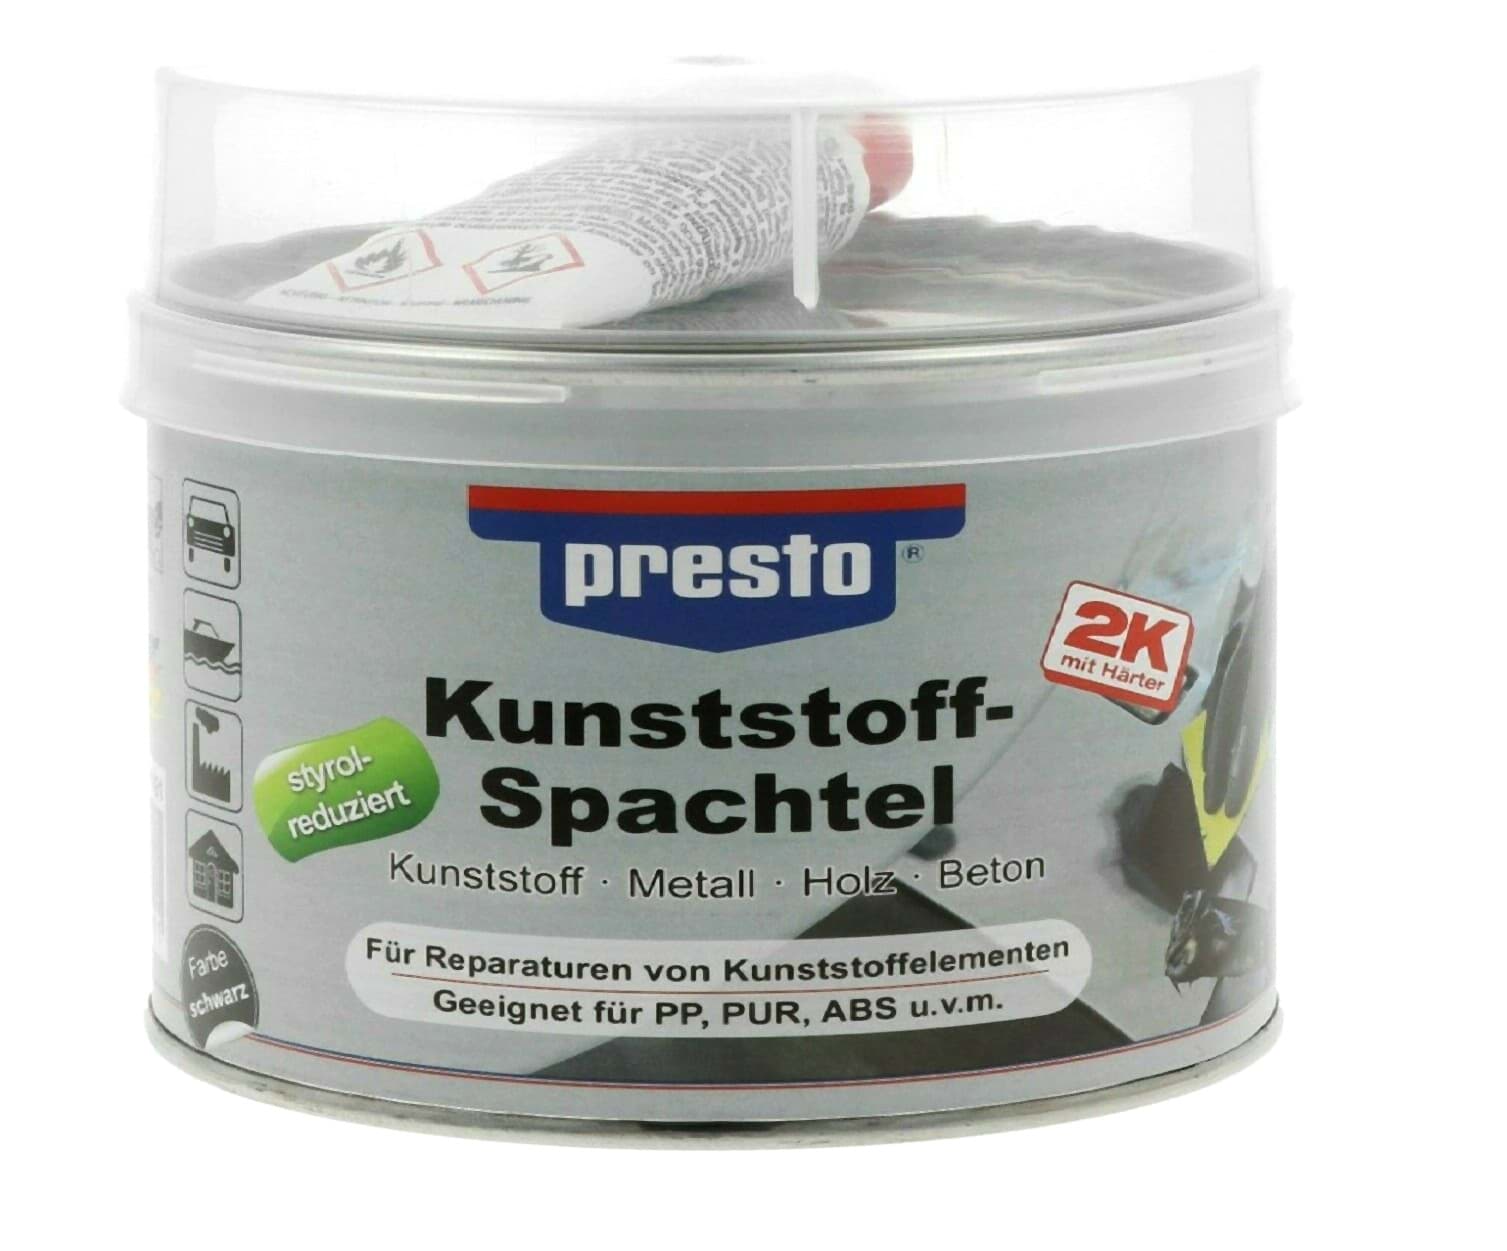 Presto Kunststoffspachtel Kunststoff Spachtel Prestolith elastic 1kg resmi